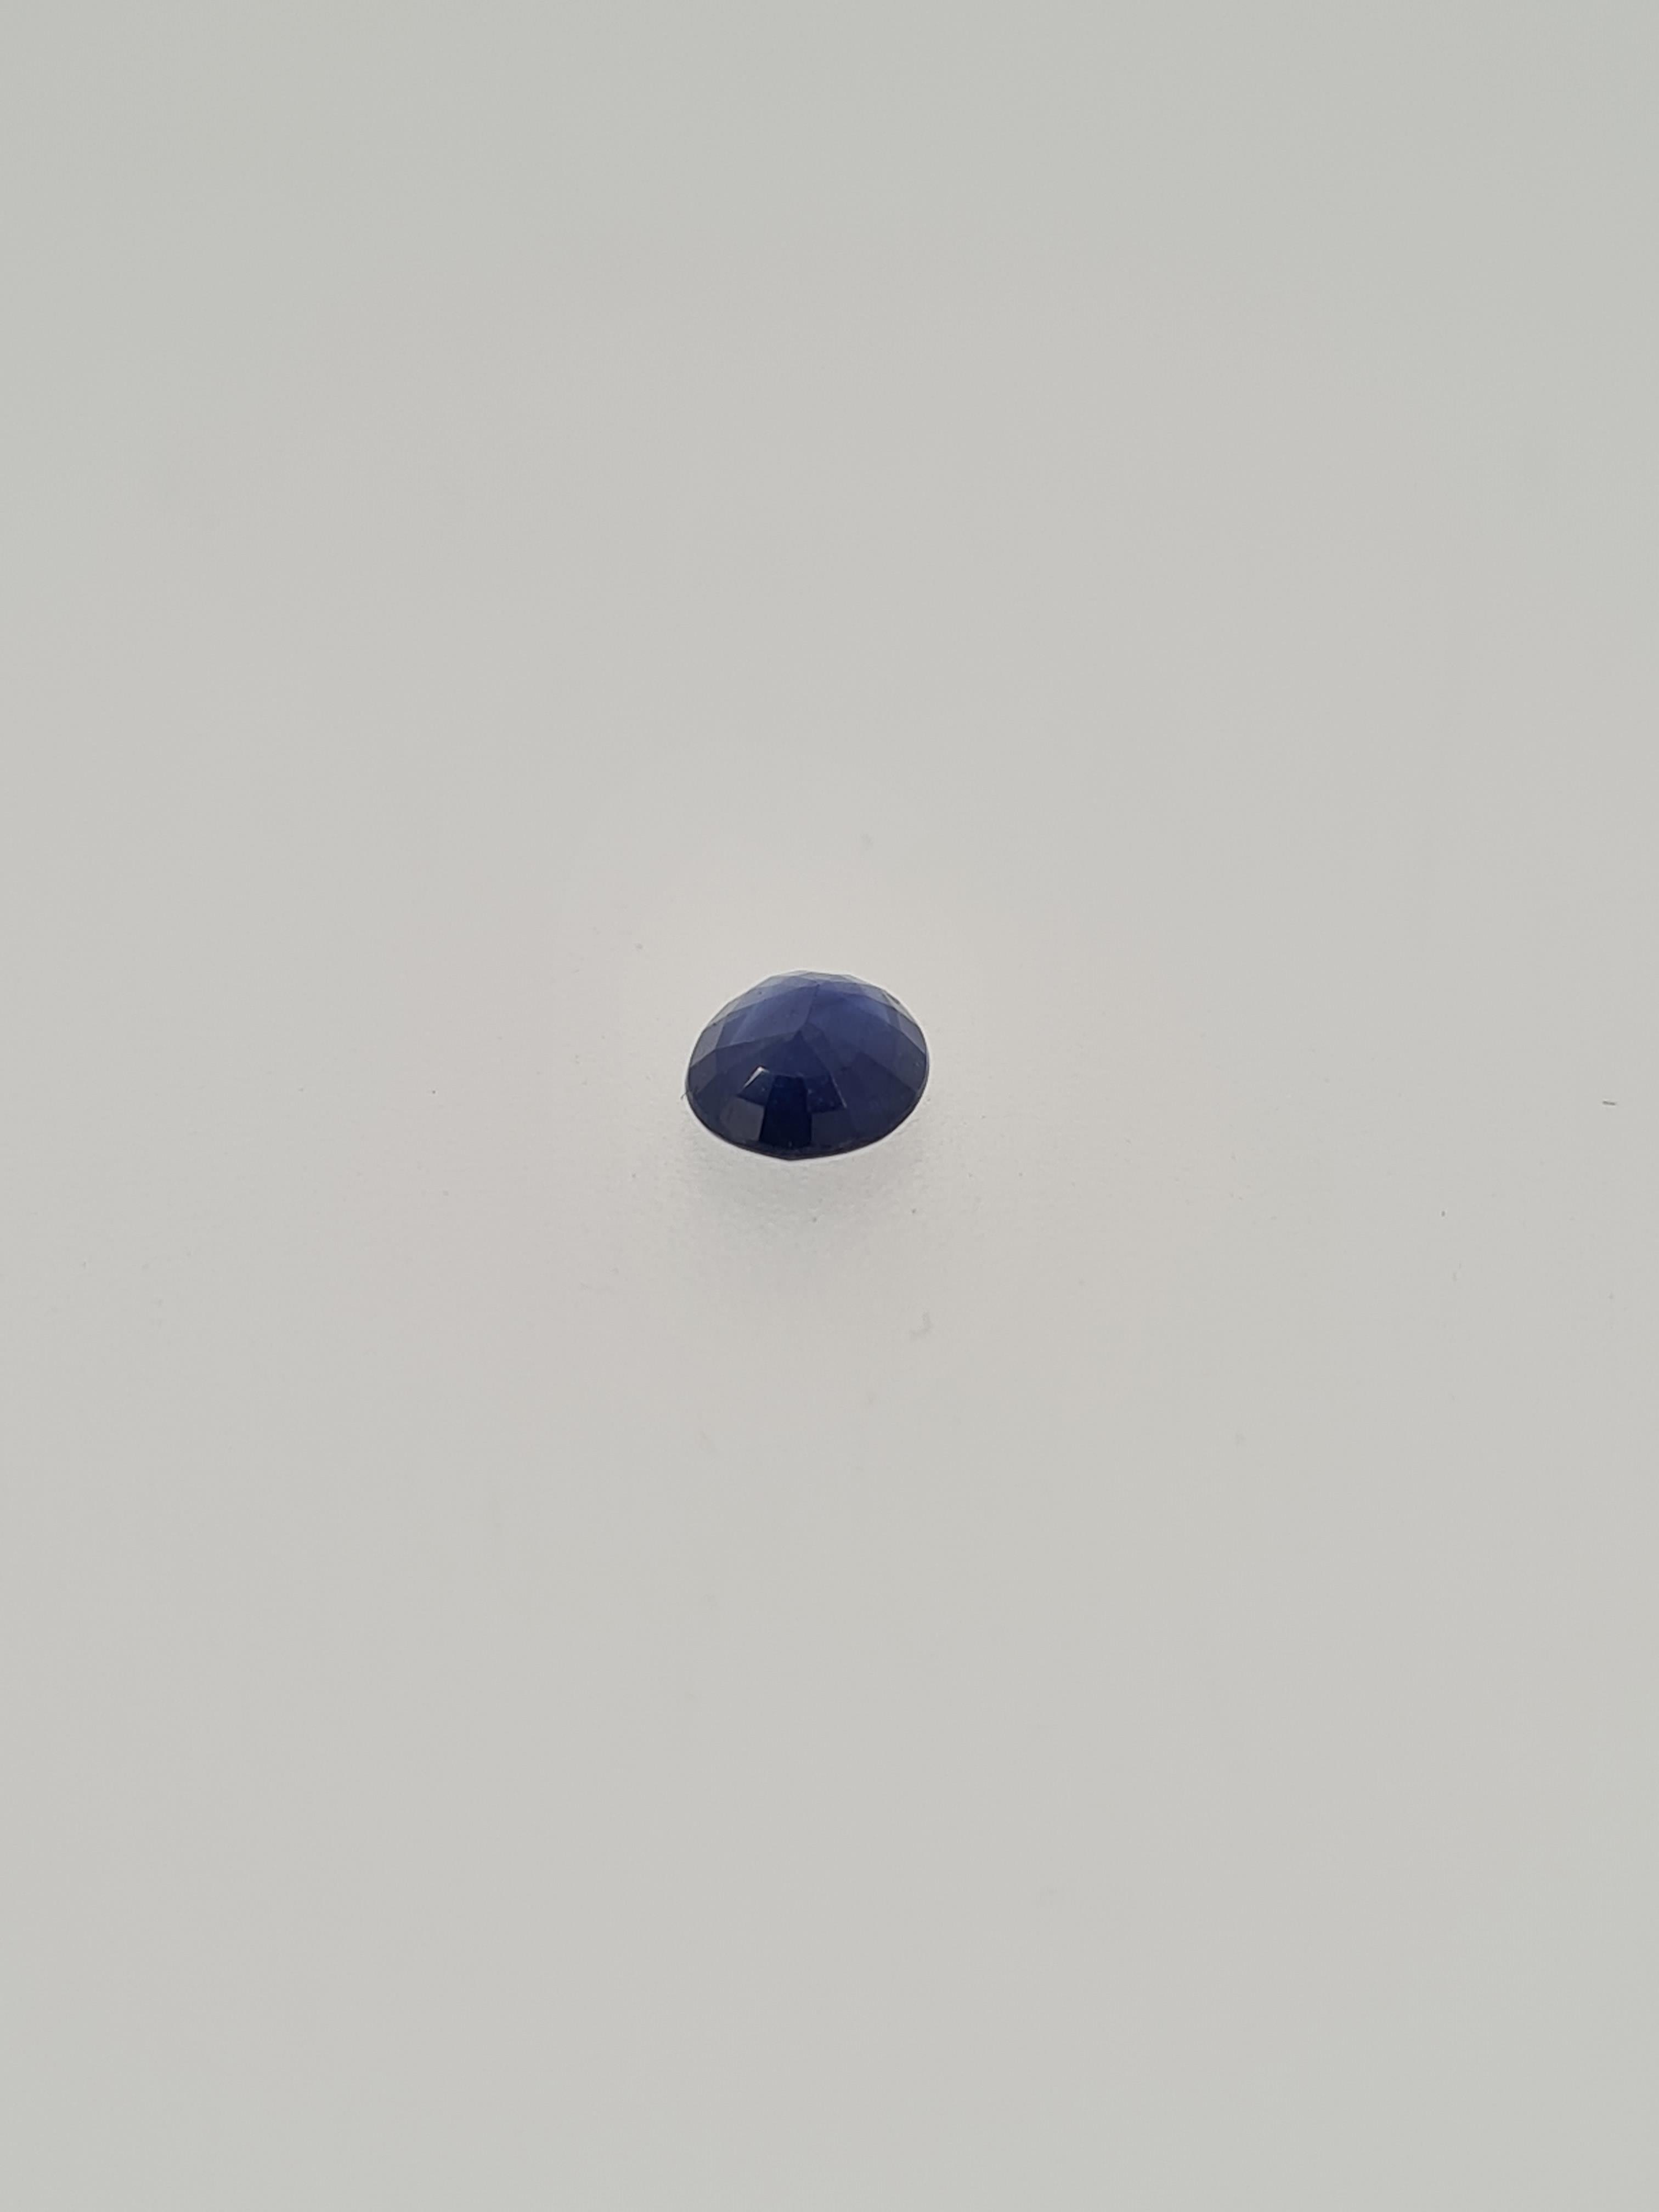 Oval cut sapphire gem stone - Image 4 of 4